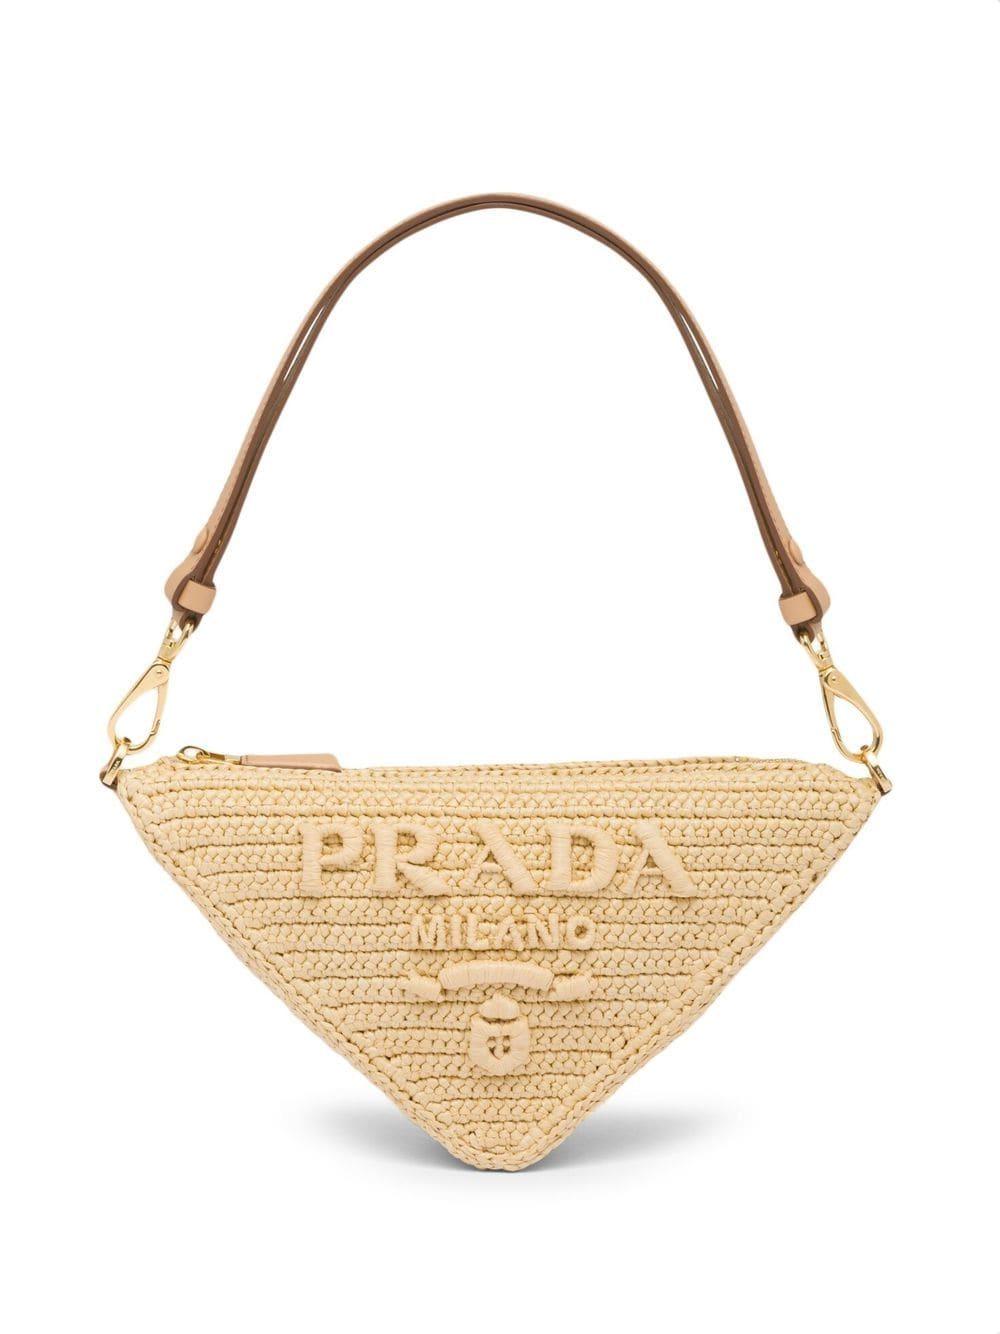 Prada Women's Triangle Mini-Bag